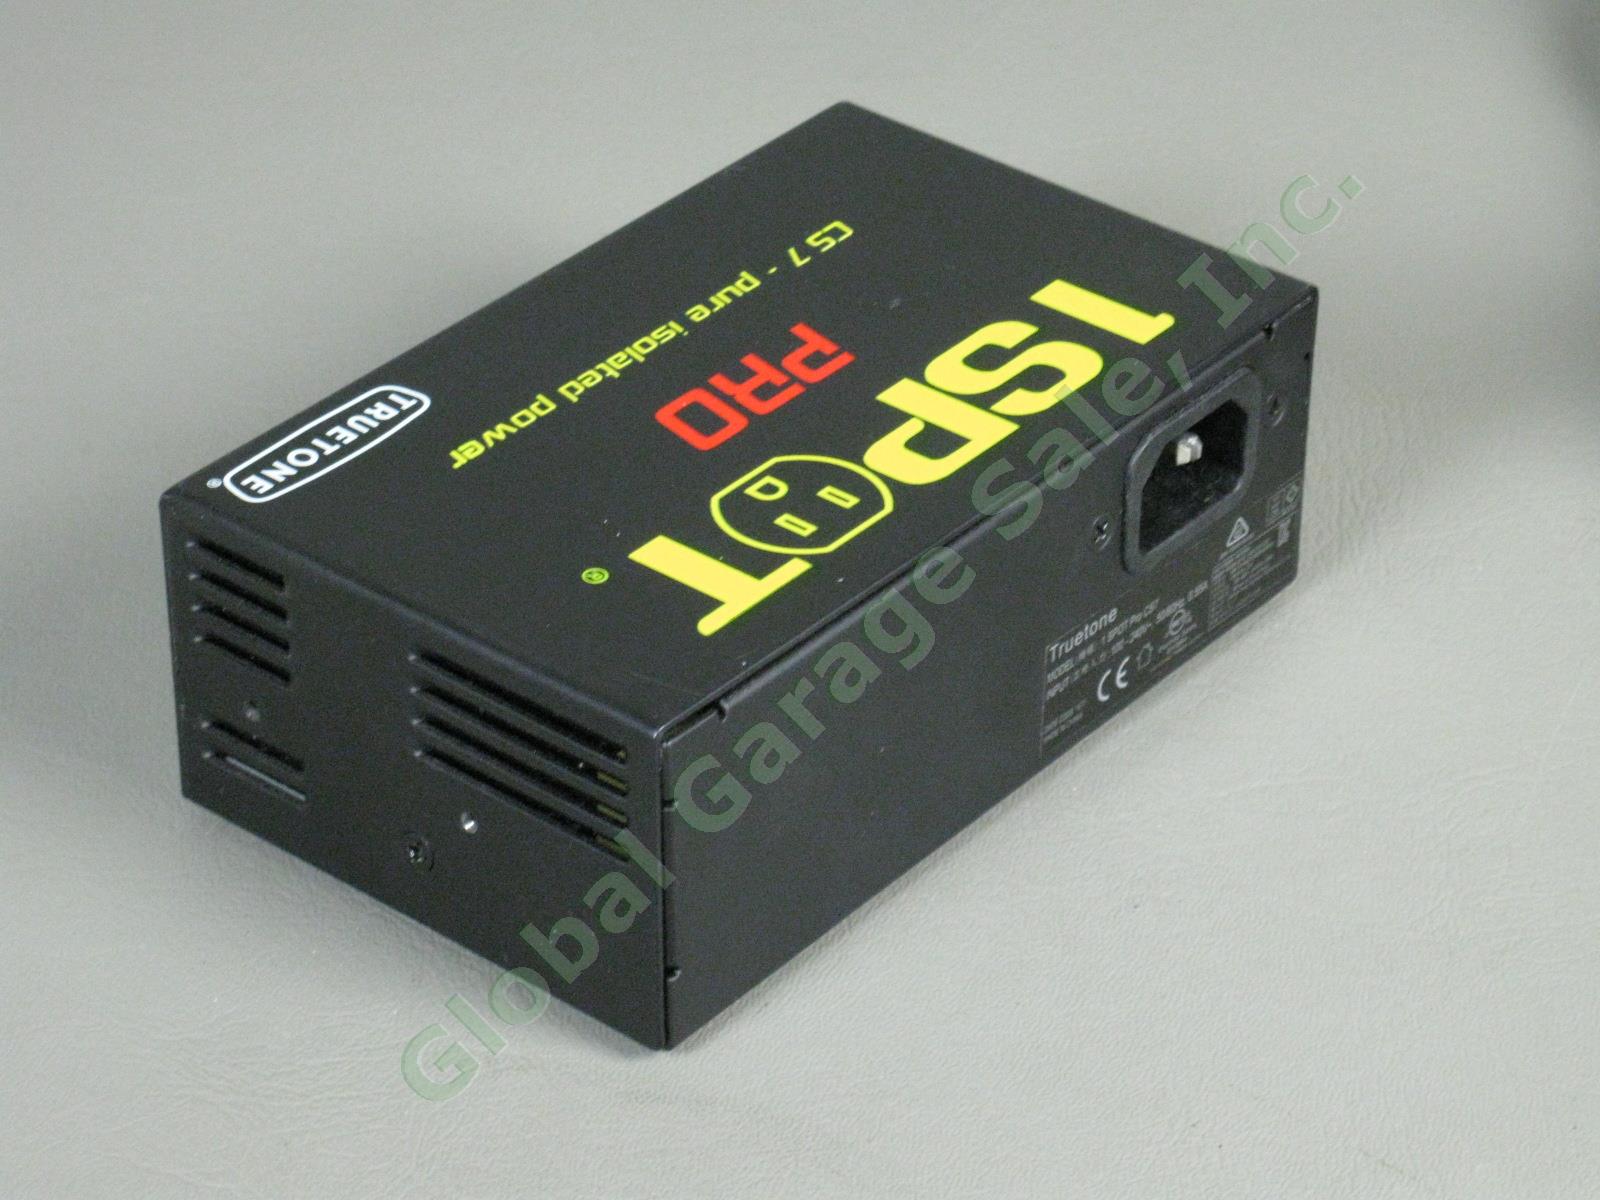 Truetone 1 Spot Pro CS7 Effects Pedal Power Supply Orig Box One Owner Near Mint! 2